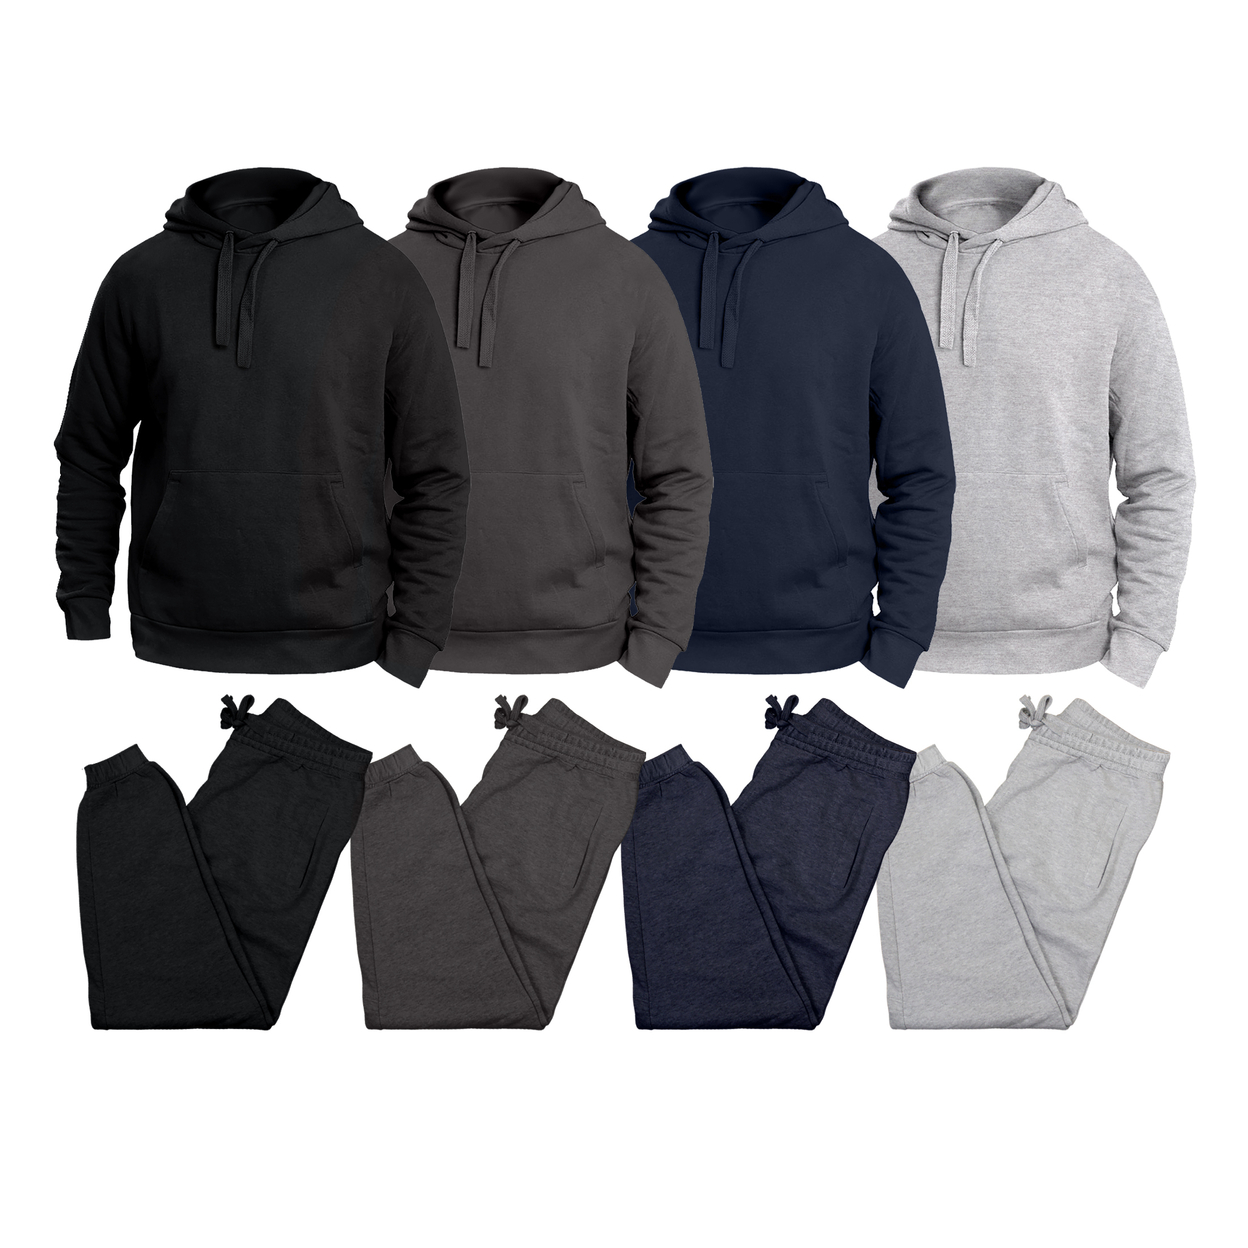 Men's Big & Tall Winter Warm Cozy Athletic Fleece Lined Multi-Pocket Cargo Sweatsuit - Grey, Xx-large